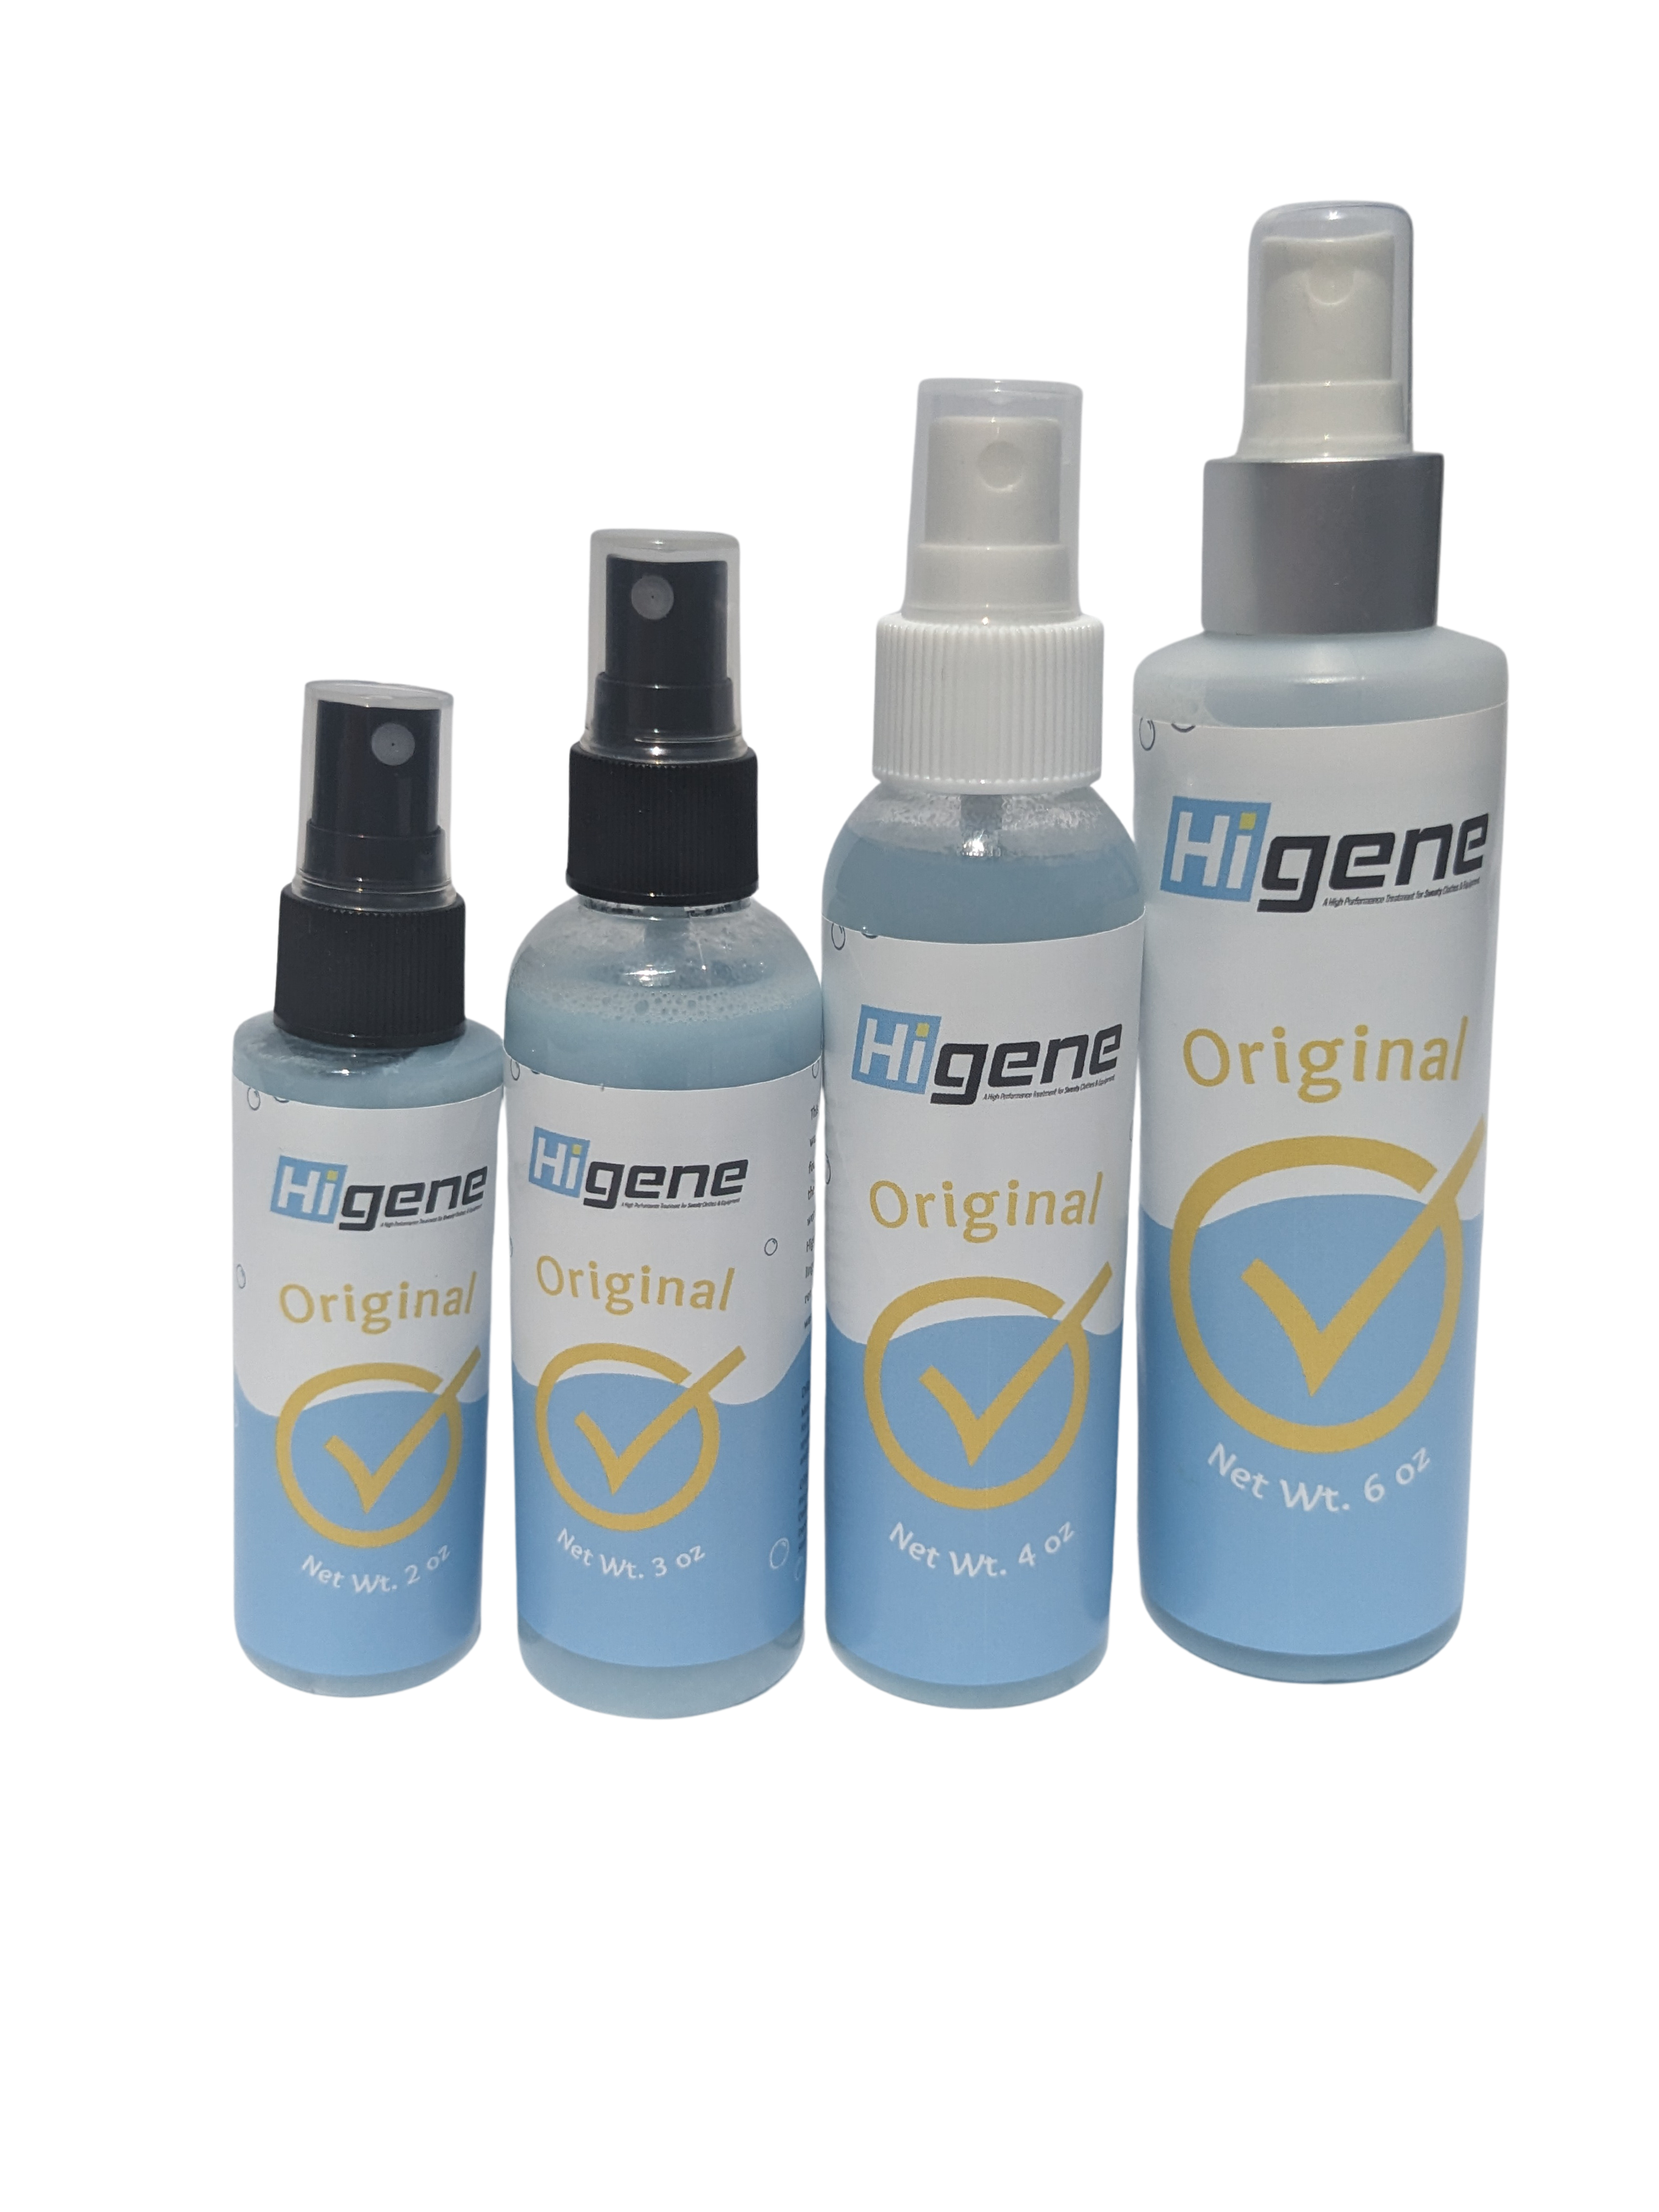 Four bottles of Higene original spray